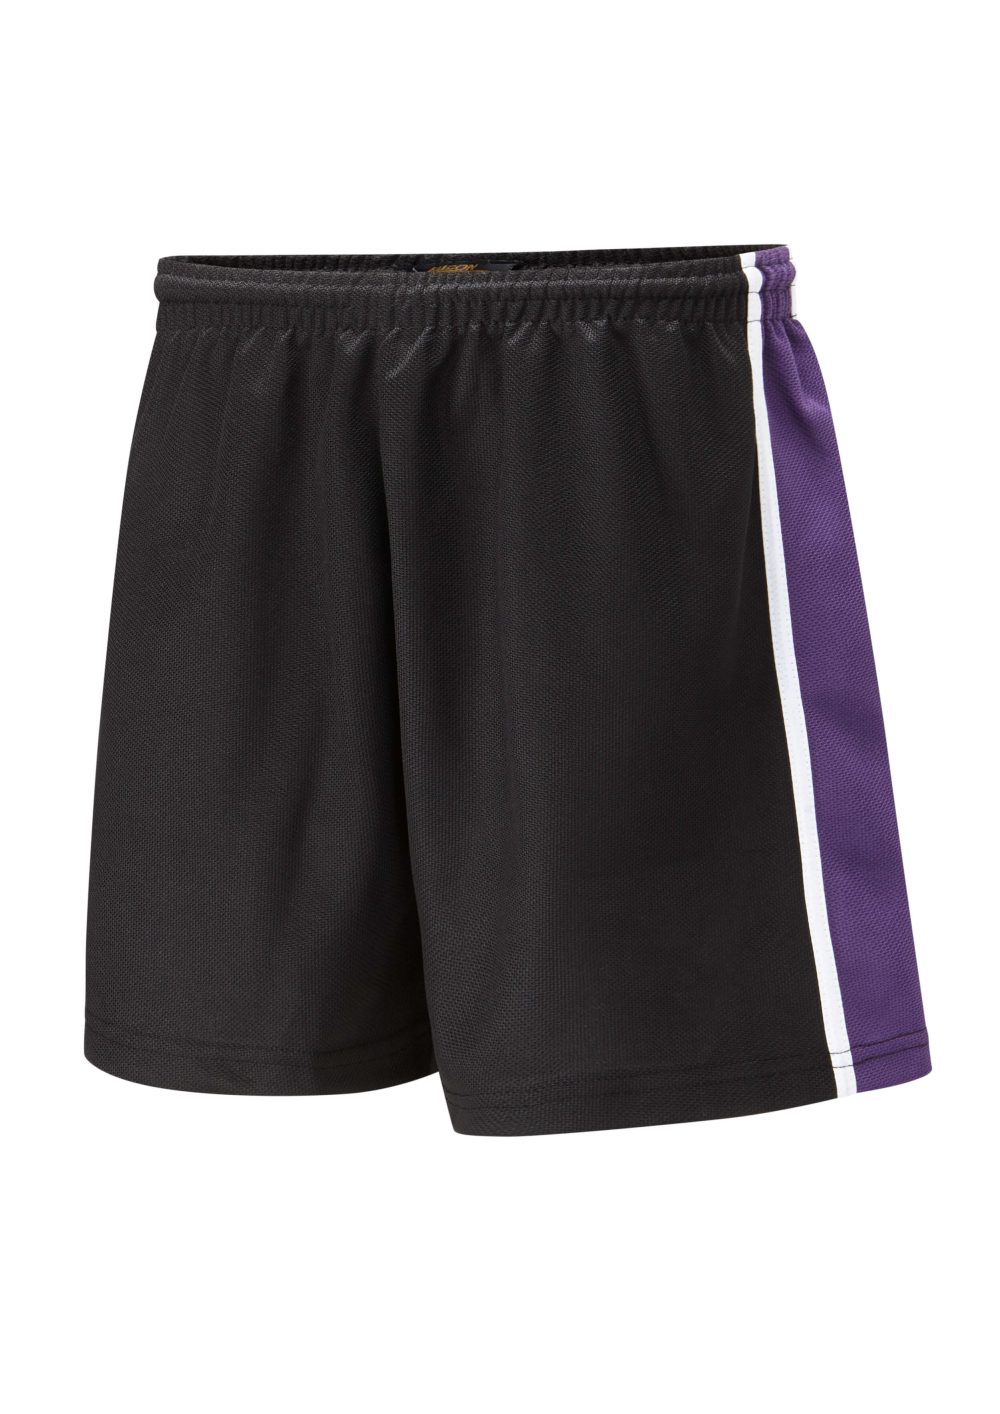 Black/Purple/White Shorts